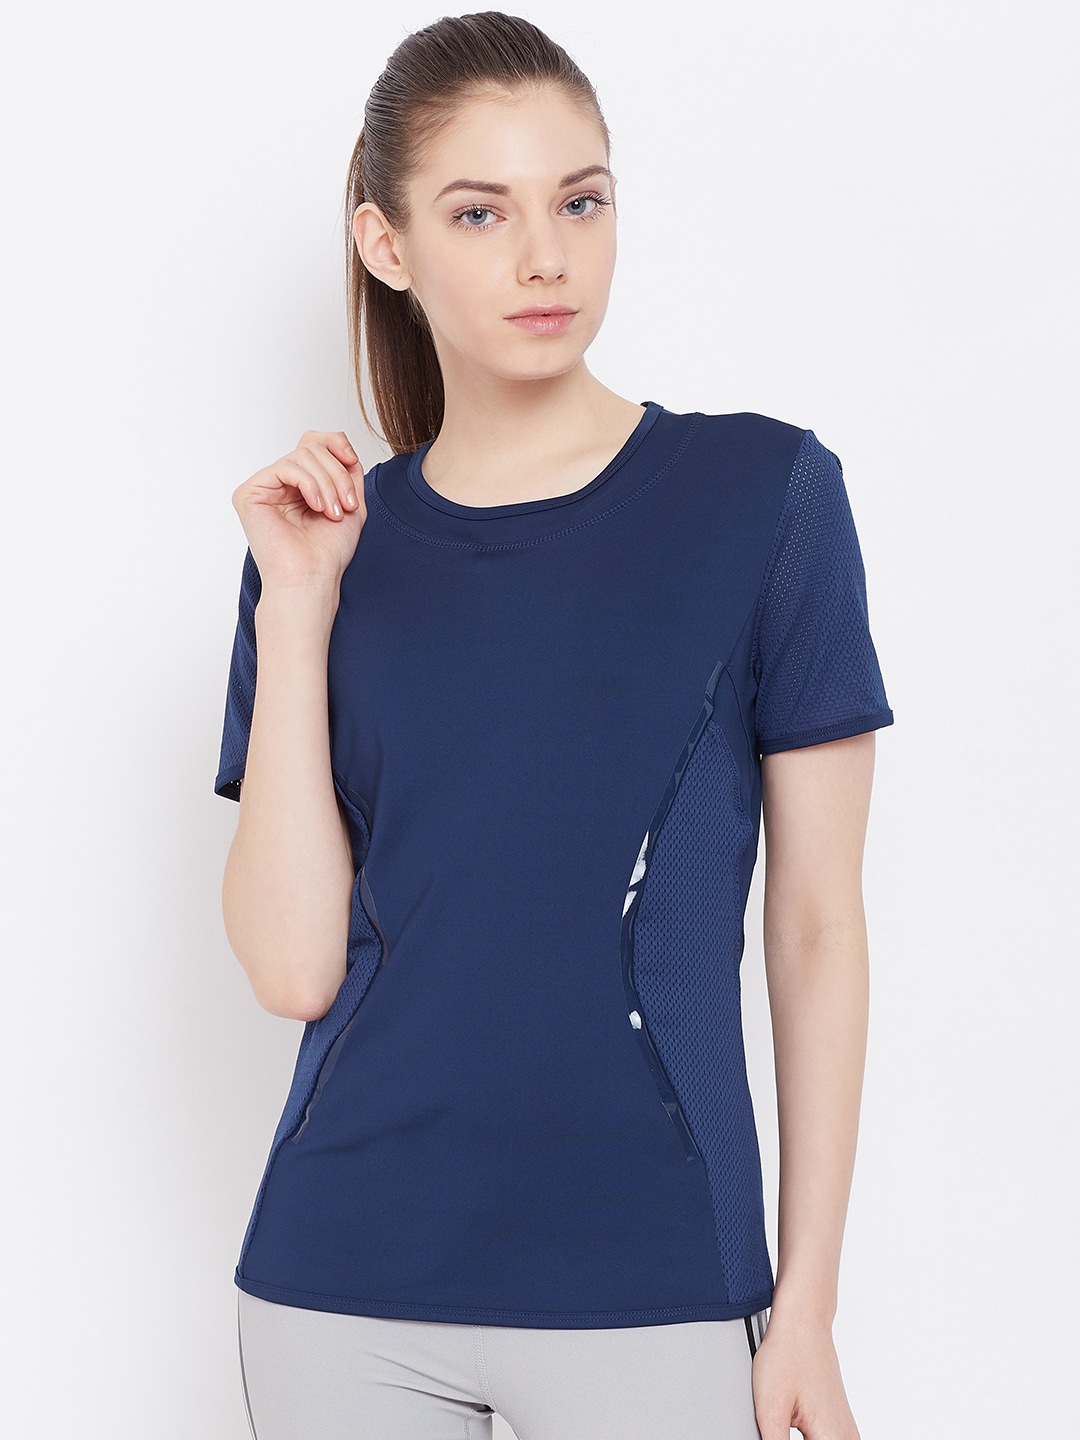 ADIDAS Stella McCartney Women Navy Blue Solid Essentials T-shirt Price in India